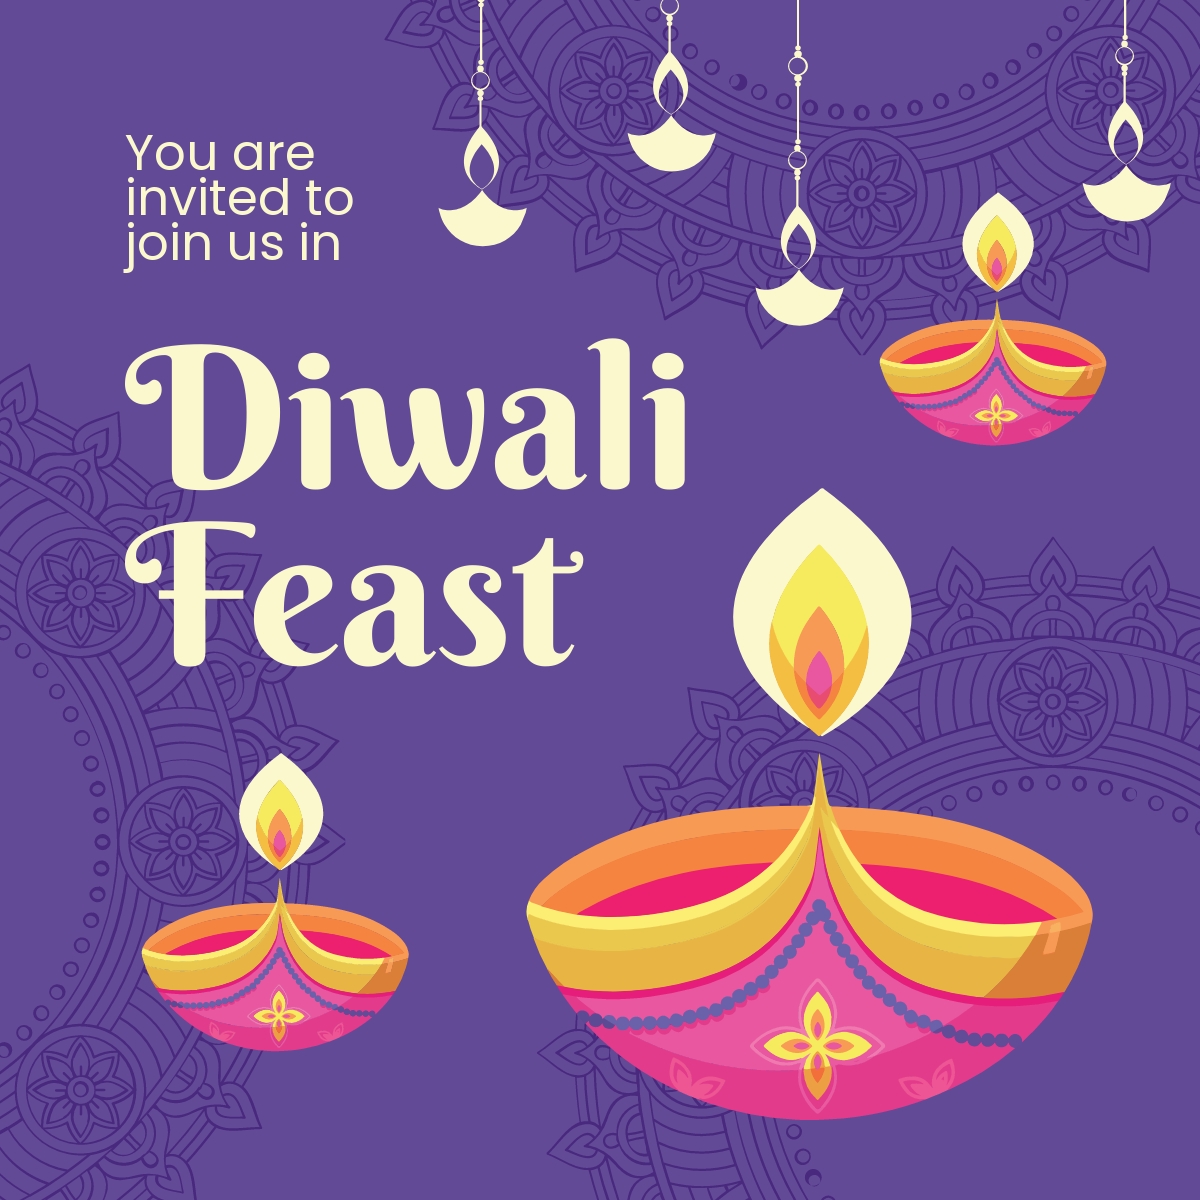 Diwali Feast Linkedin Post Template